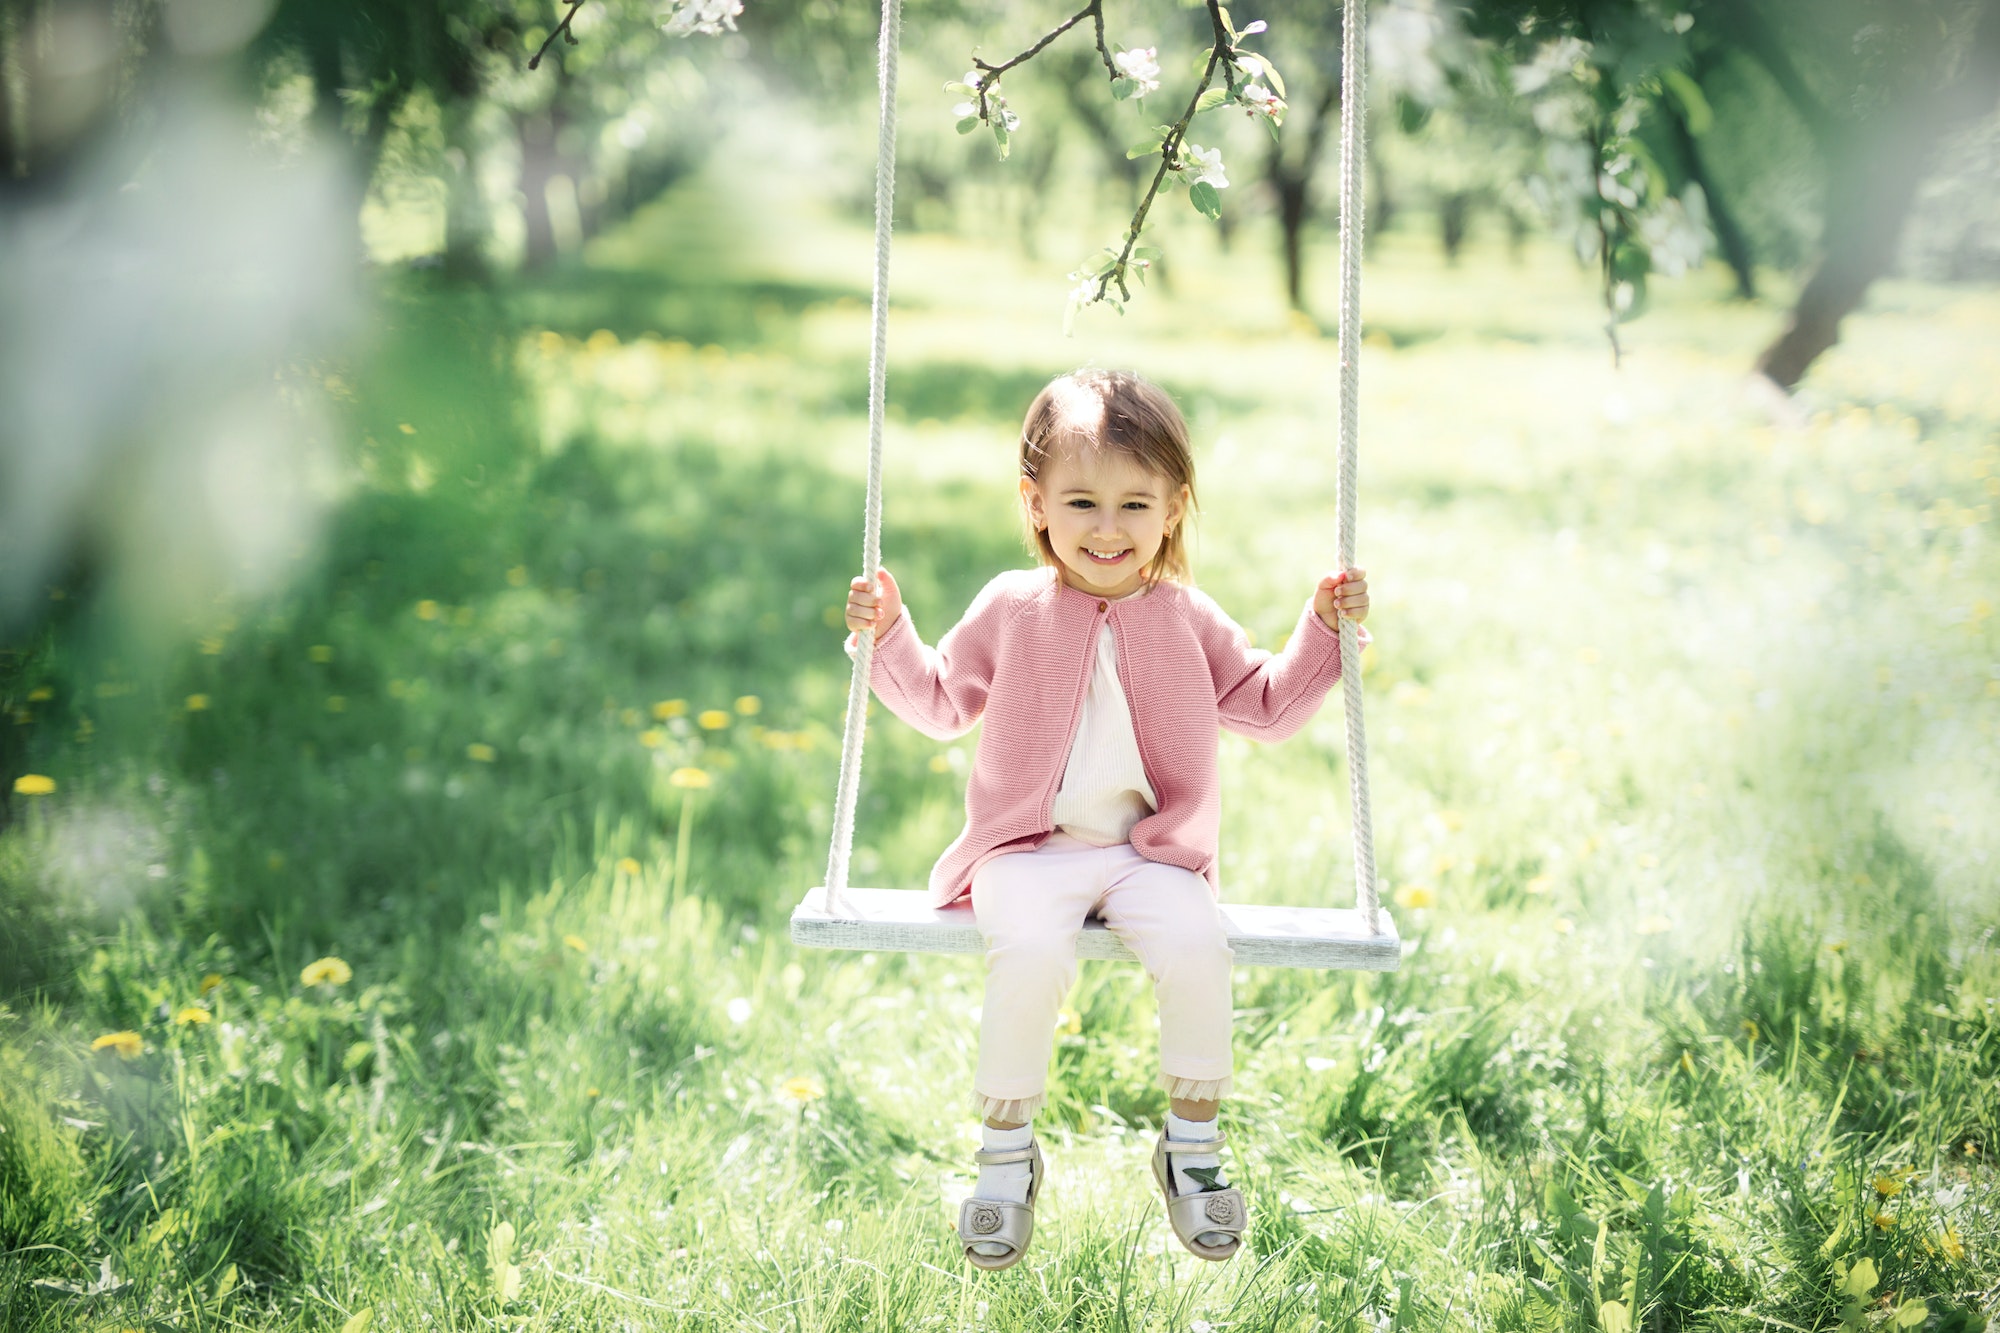 A little girl is swinging on a swing in a blooming garden.